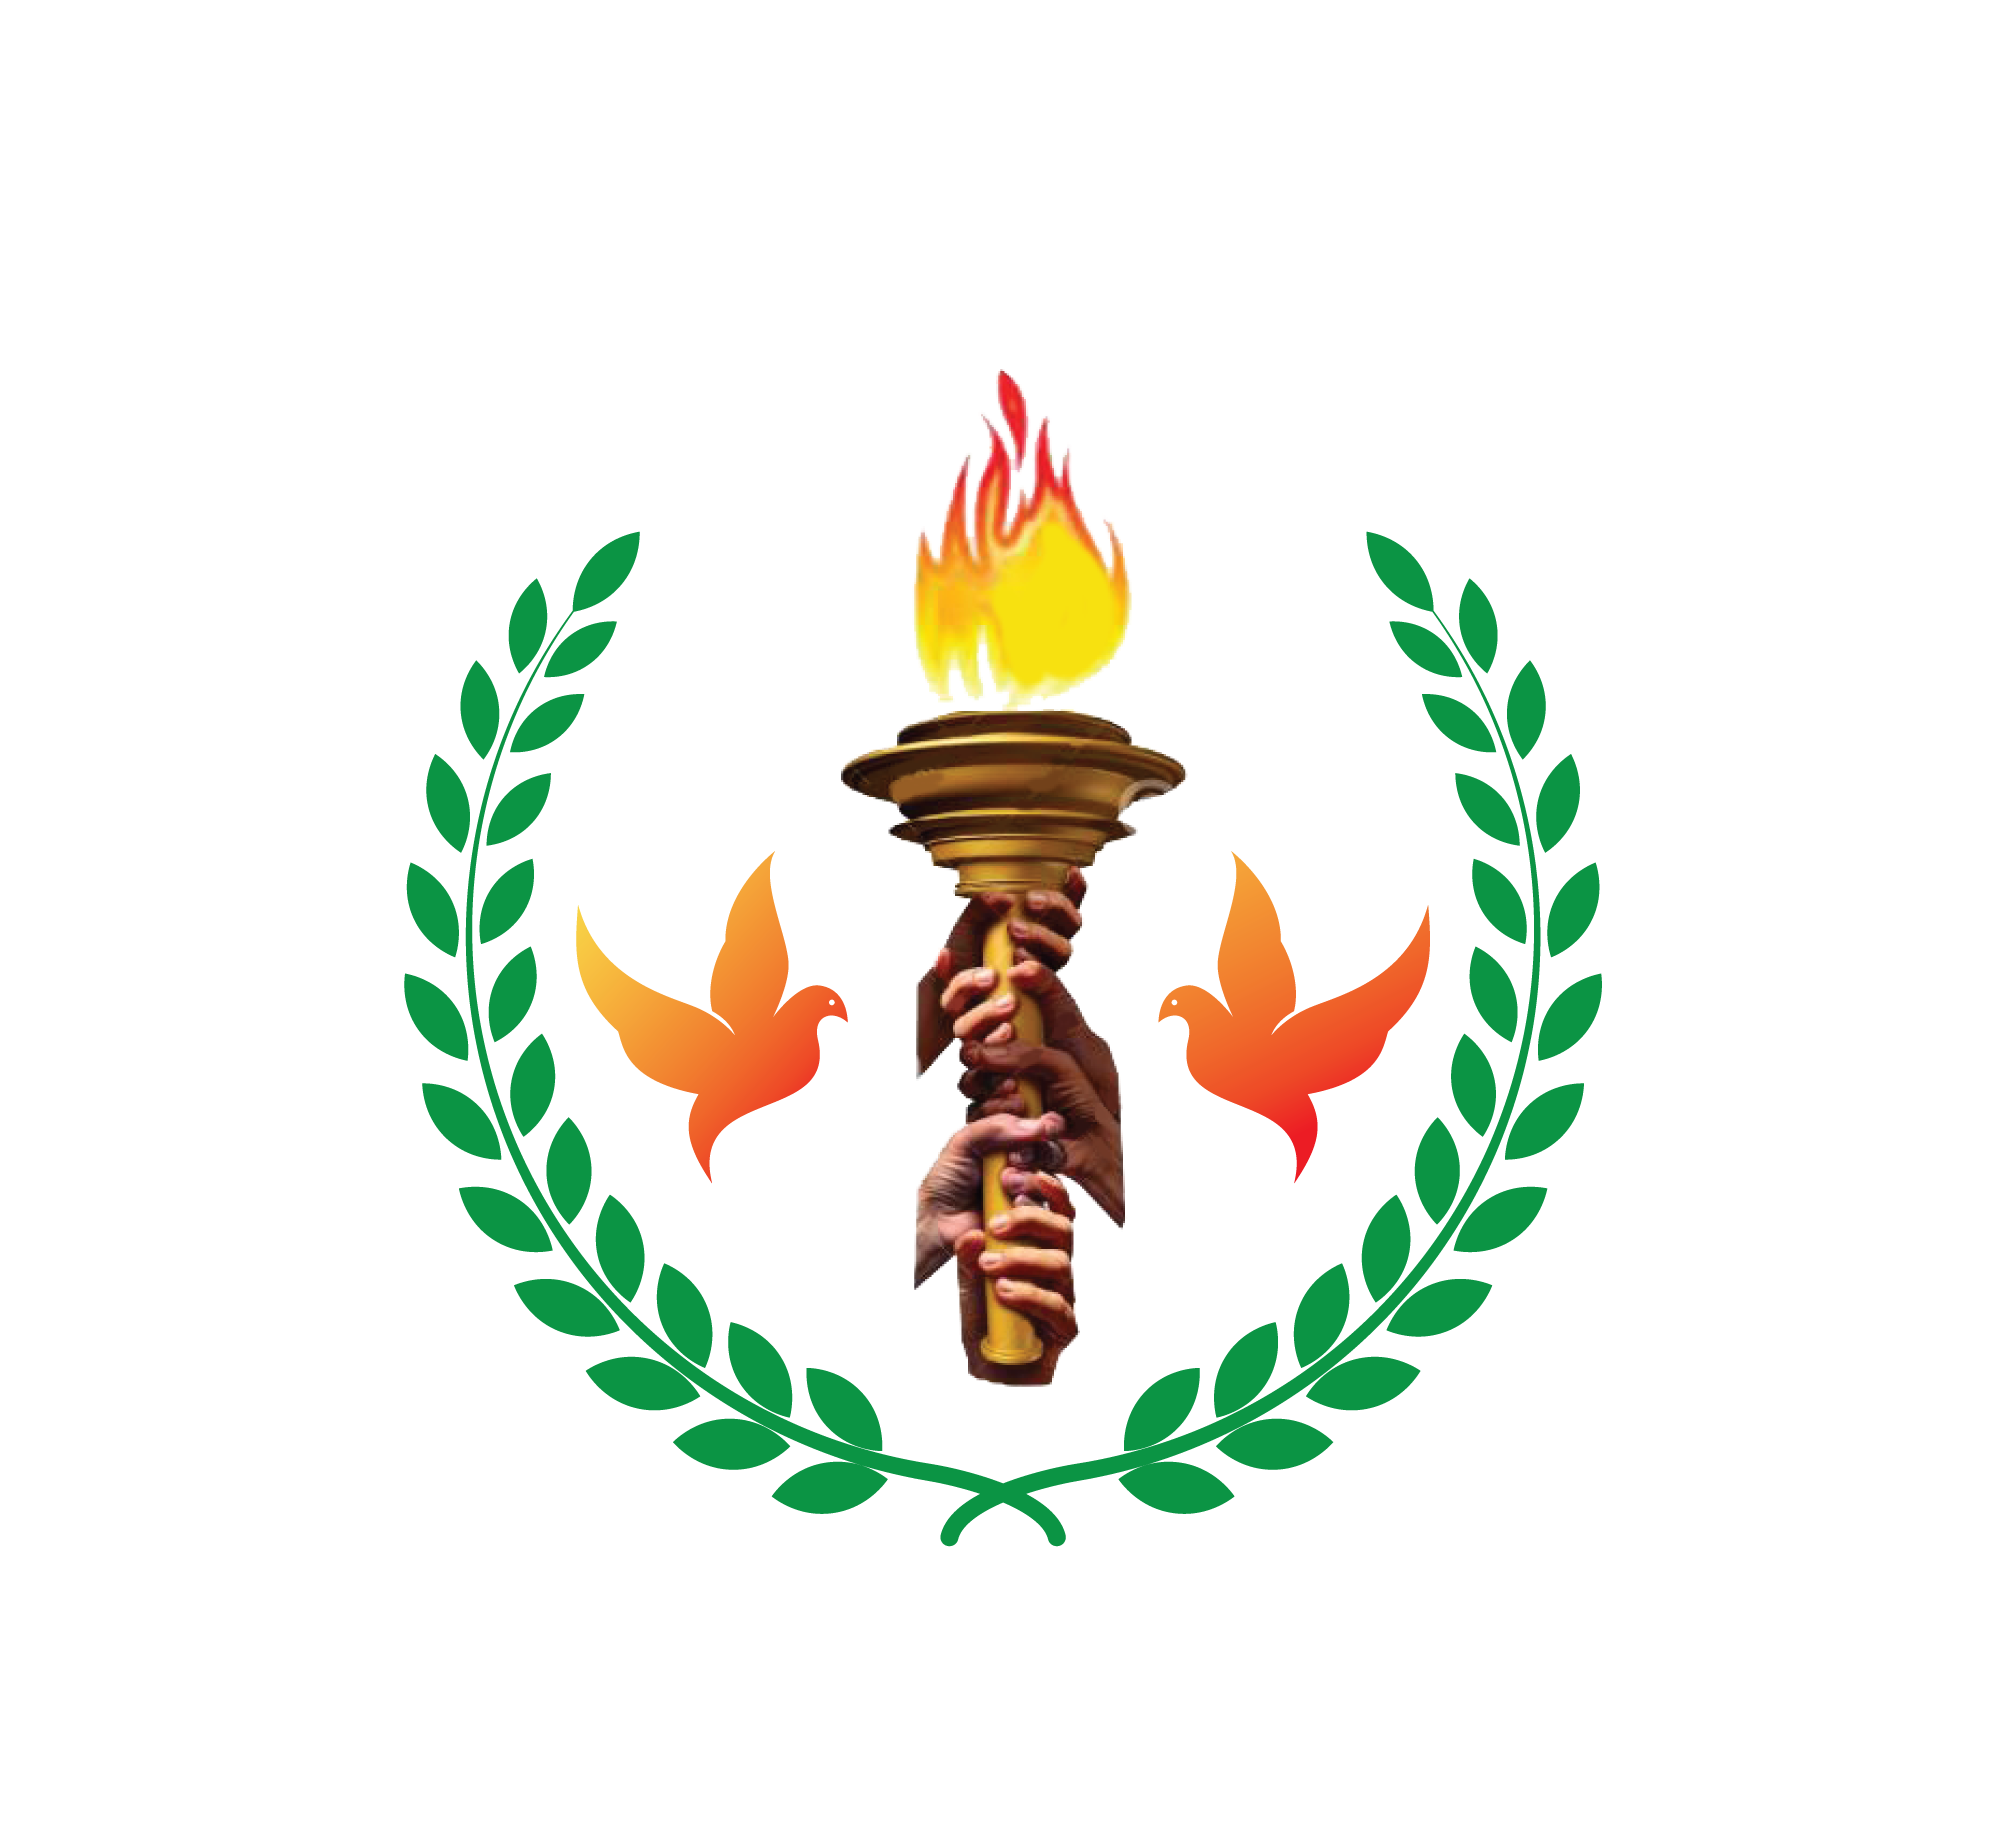 About – Embrace Leadership International